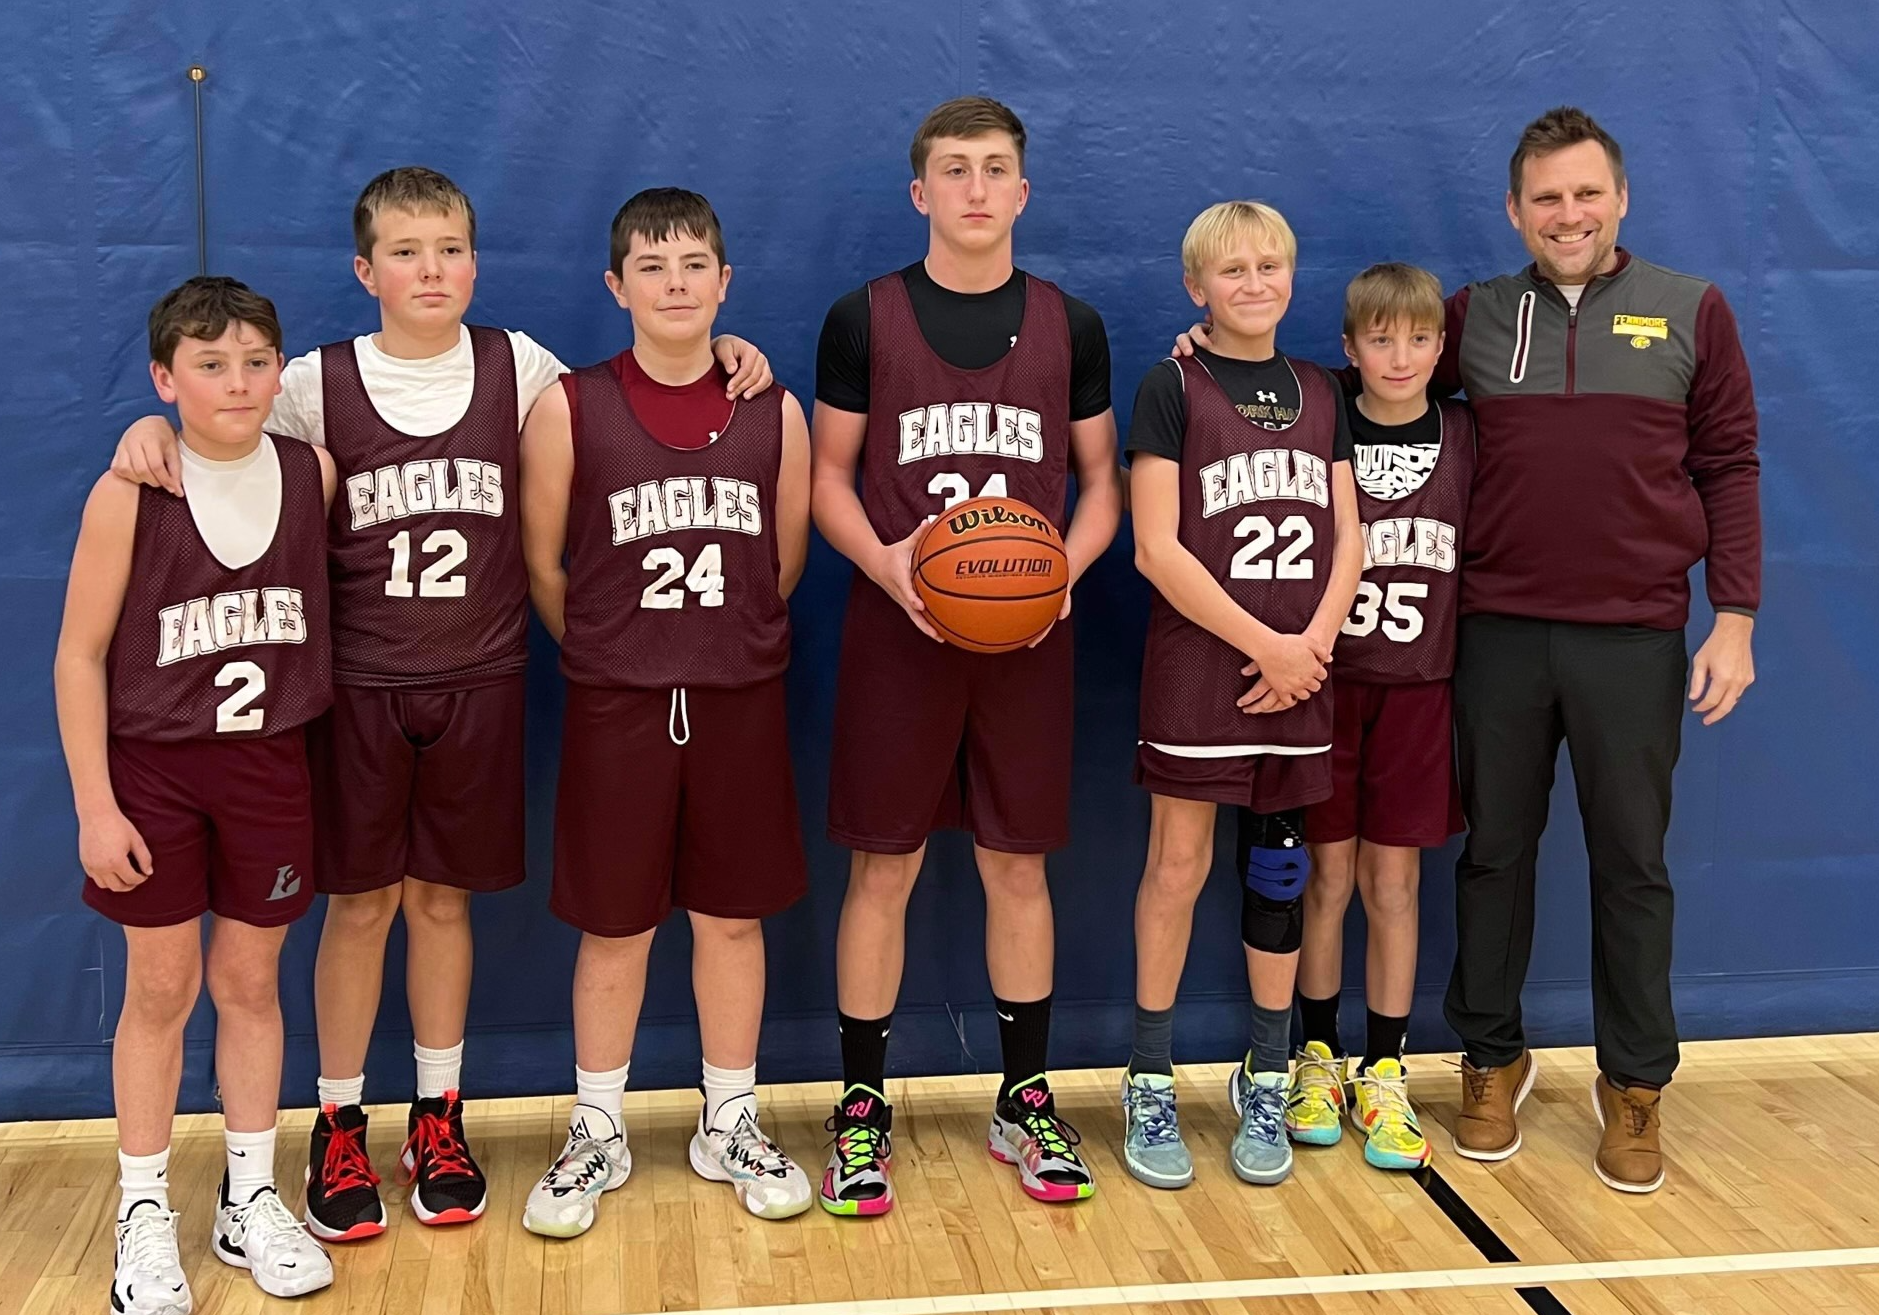 7th grade boys basketball team photo